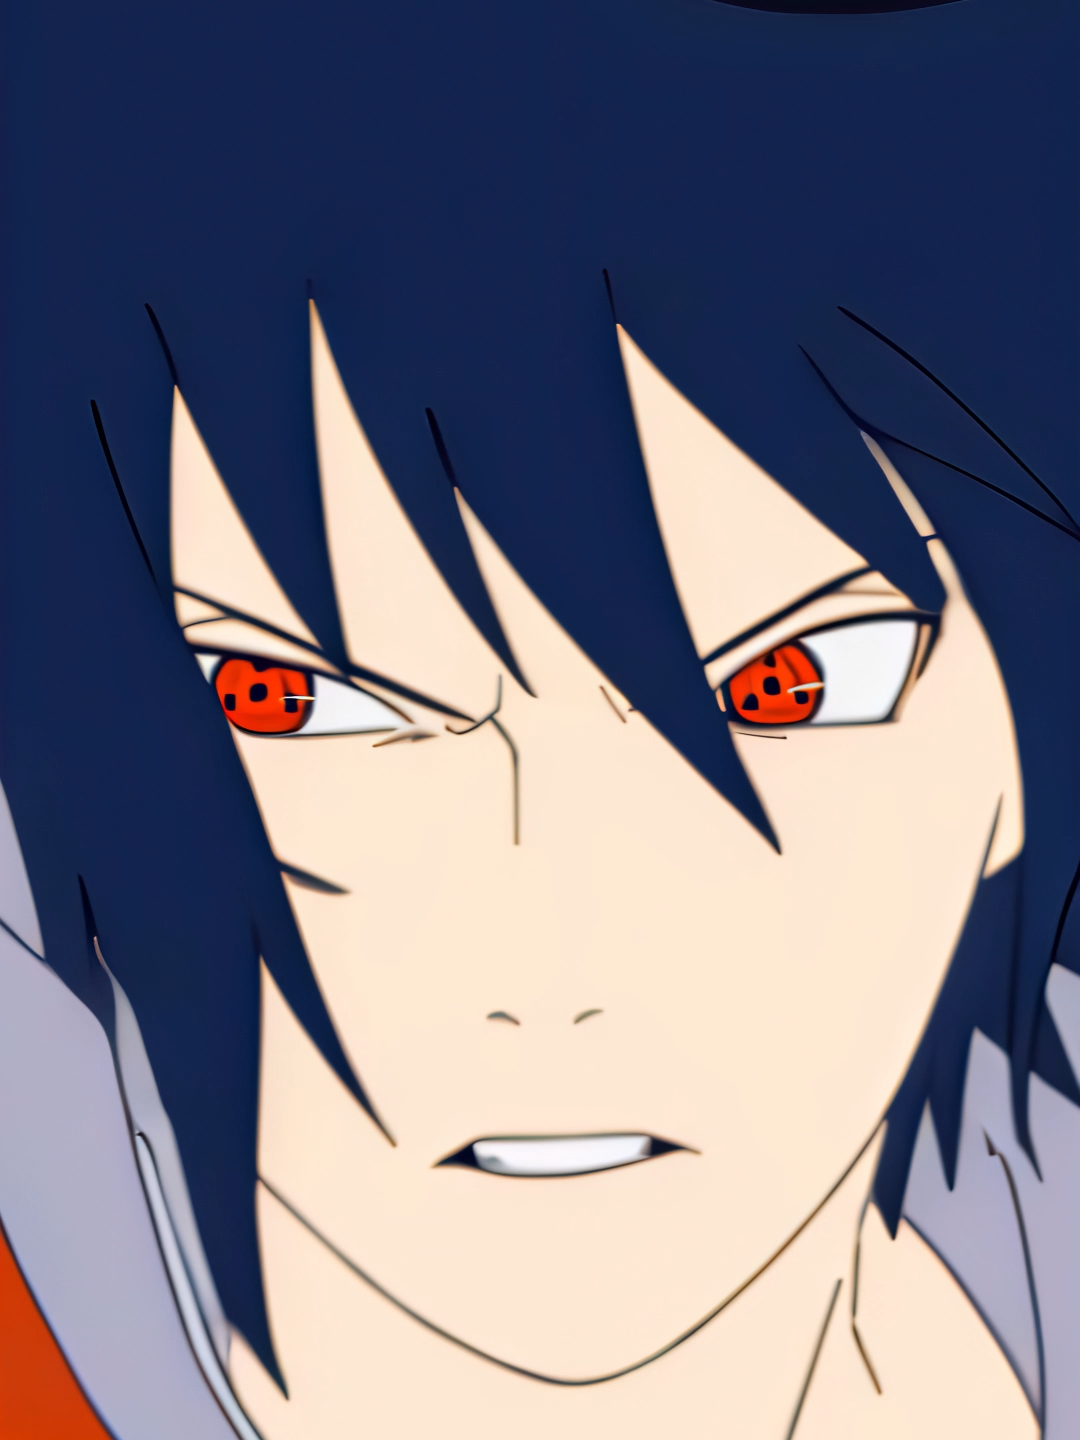 #sasuke #narutoshippuden #killerbee #anime